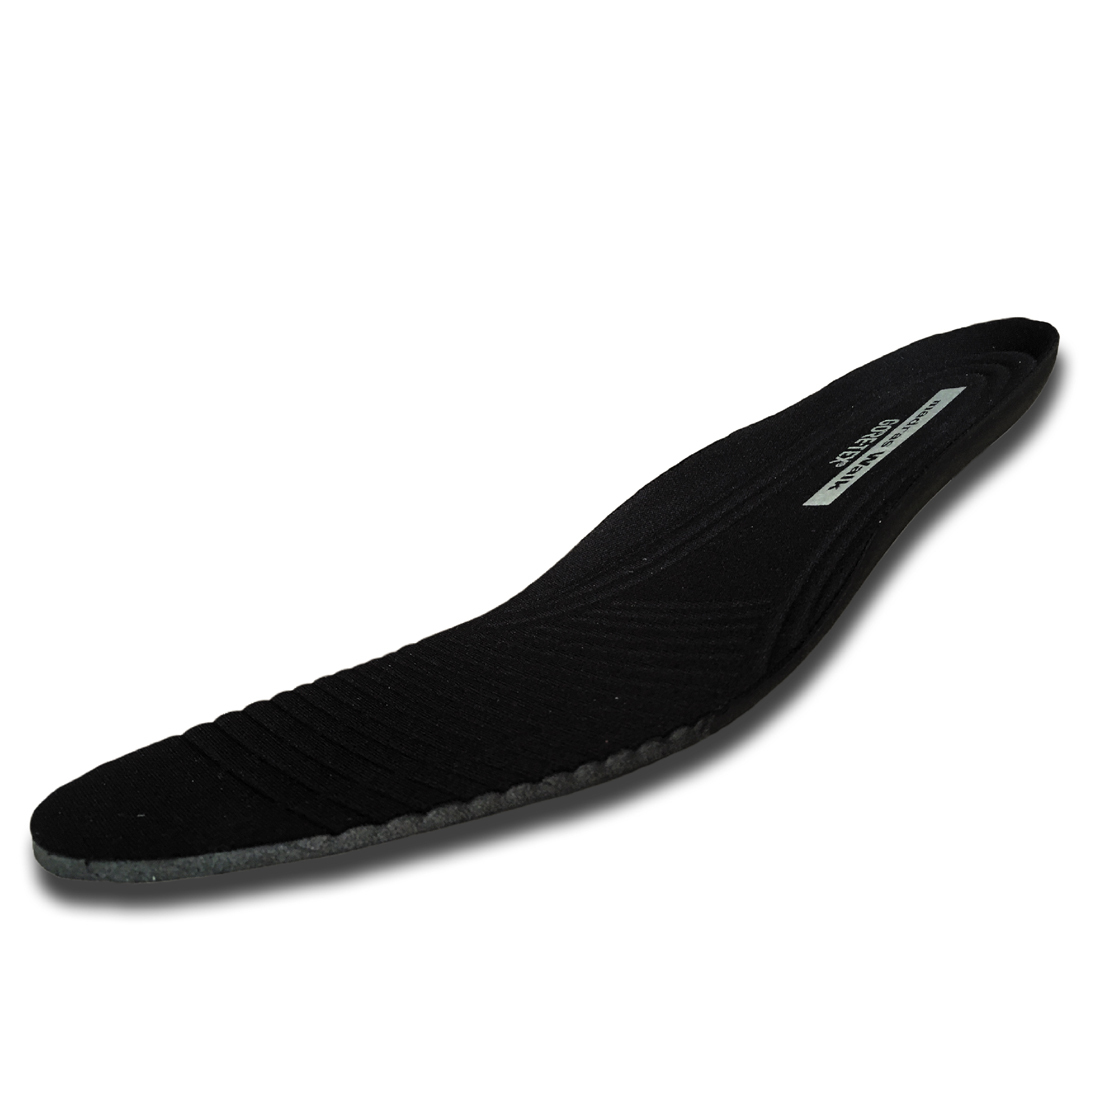 ^madras Walkma gong s walking casual shoes Gore-Tex MW8008 waterproof black Black black 25.0cm (0910010300-bk-s250)